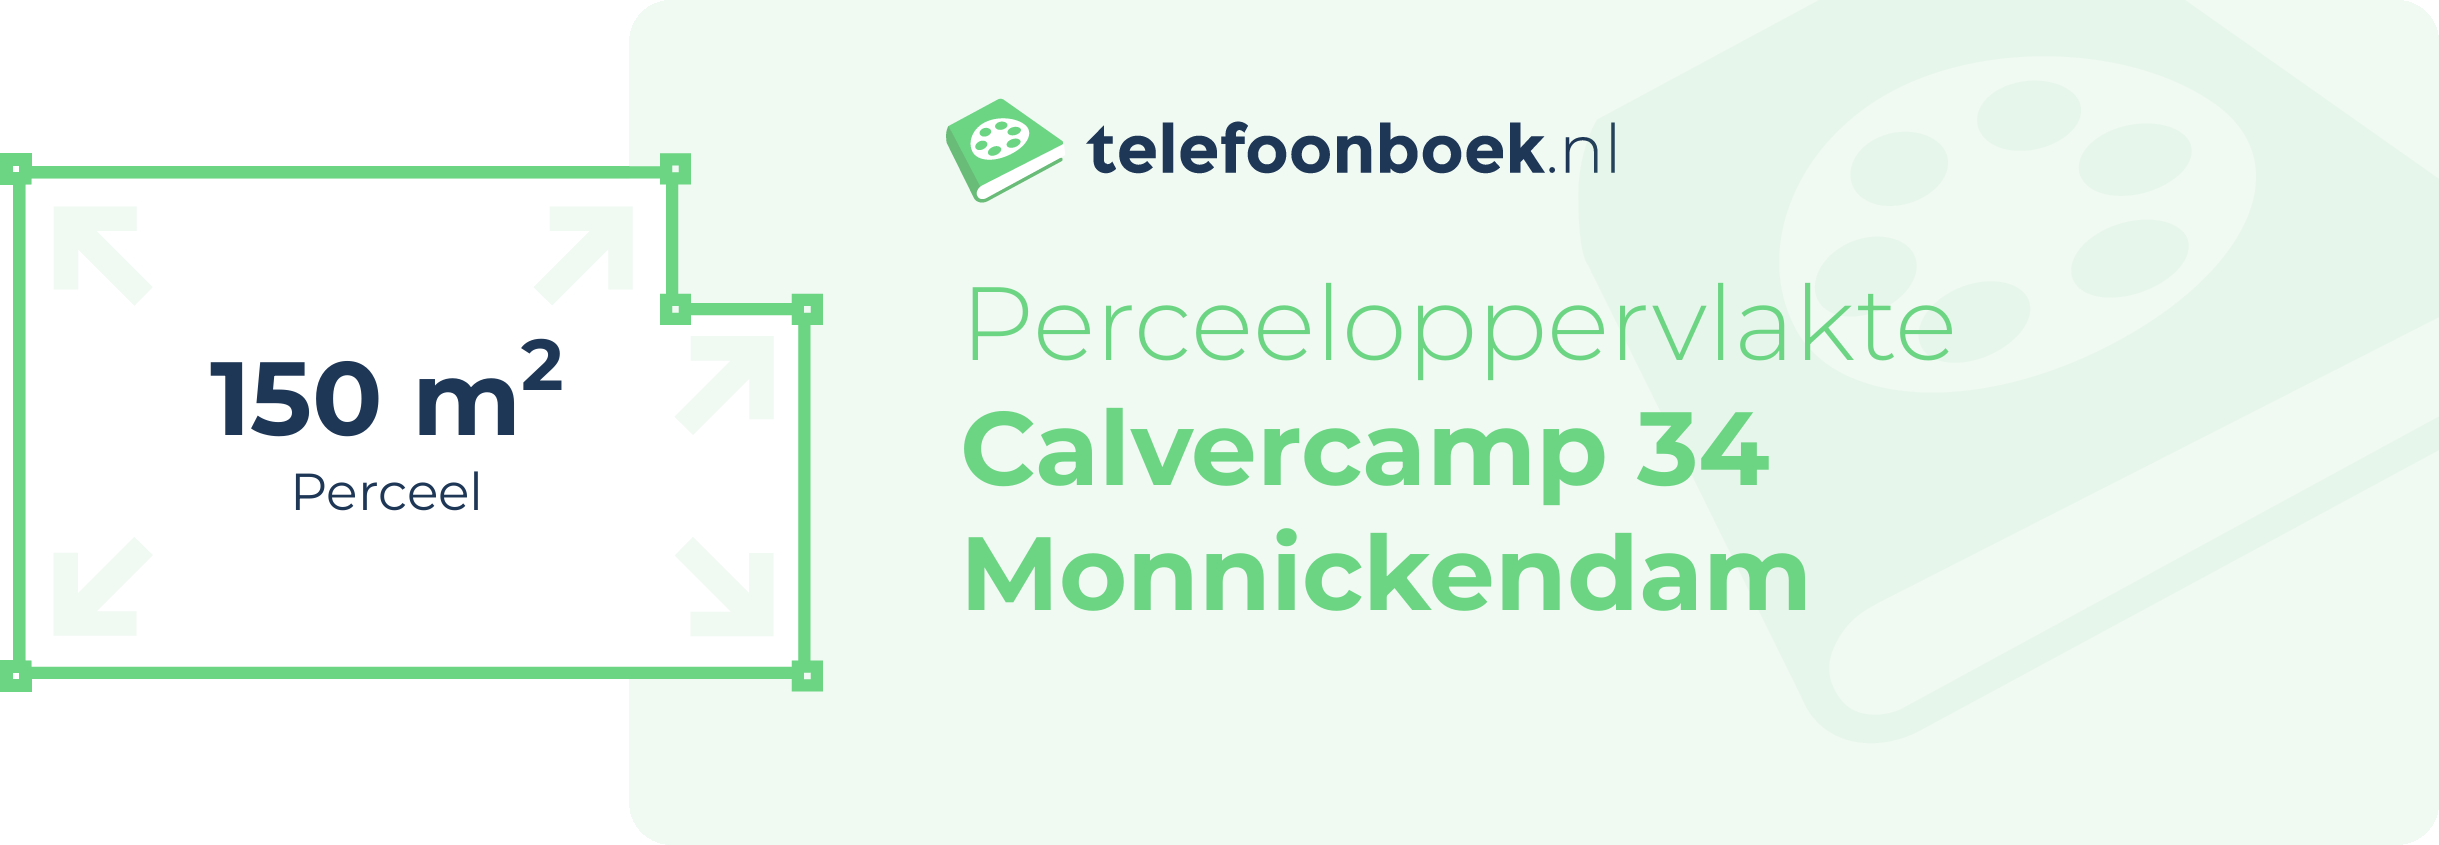 Perceeloppervlakte Calvercamp 34 Monnickendam